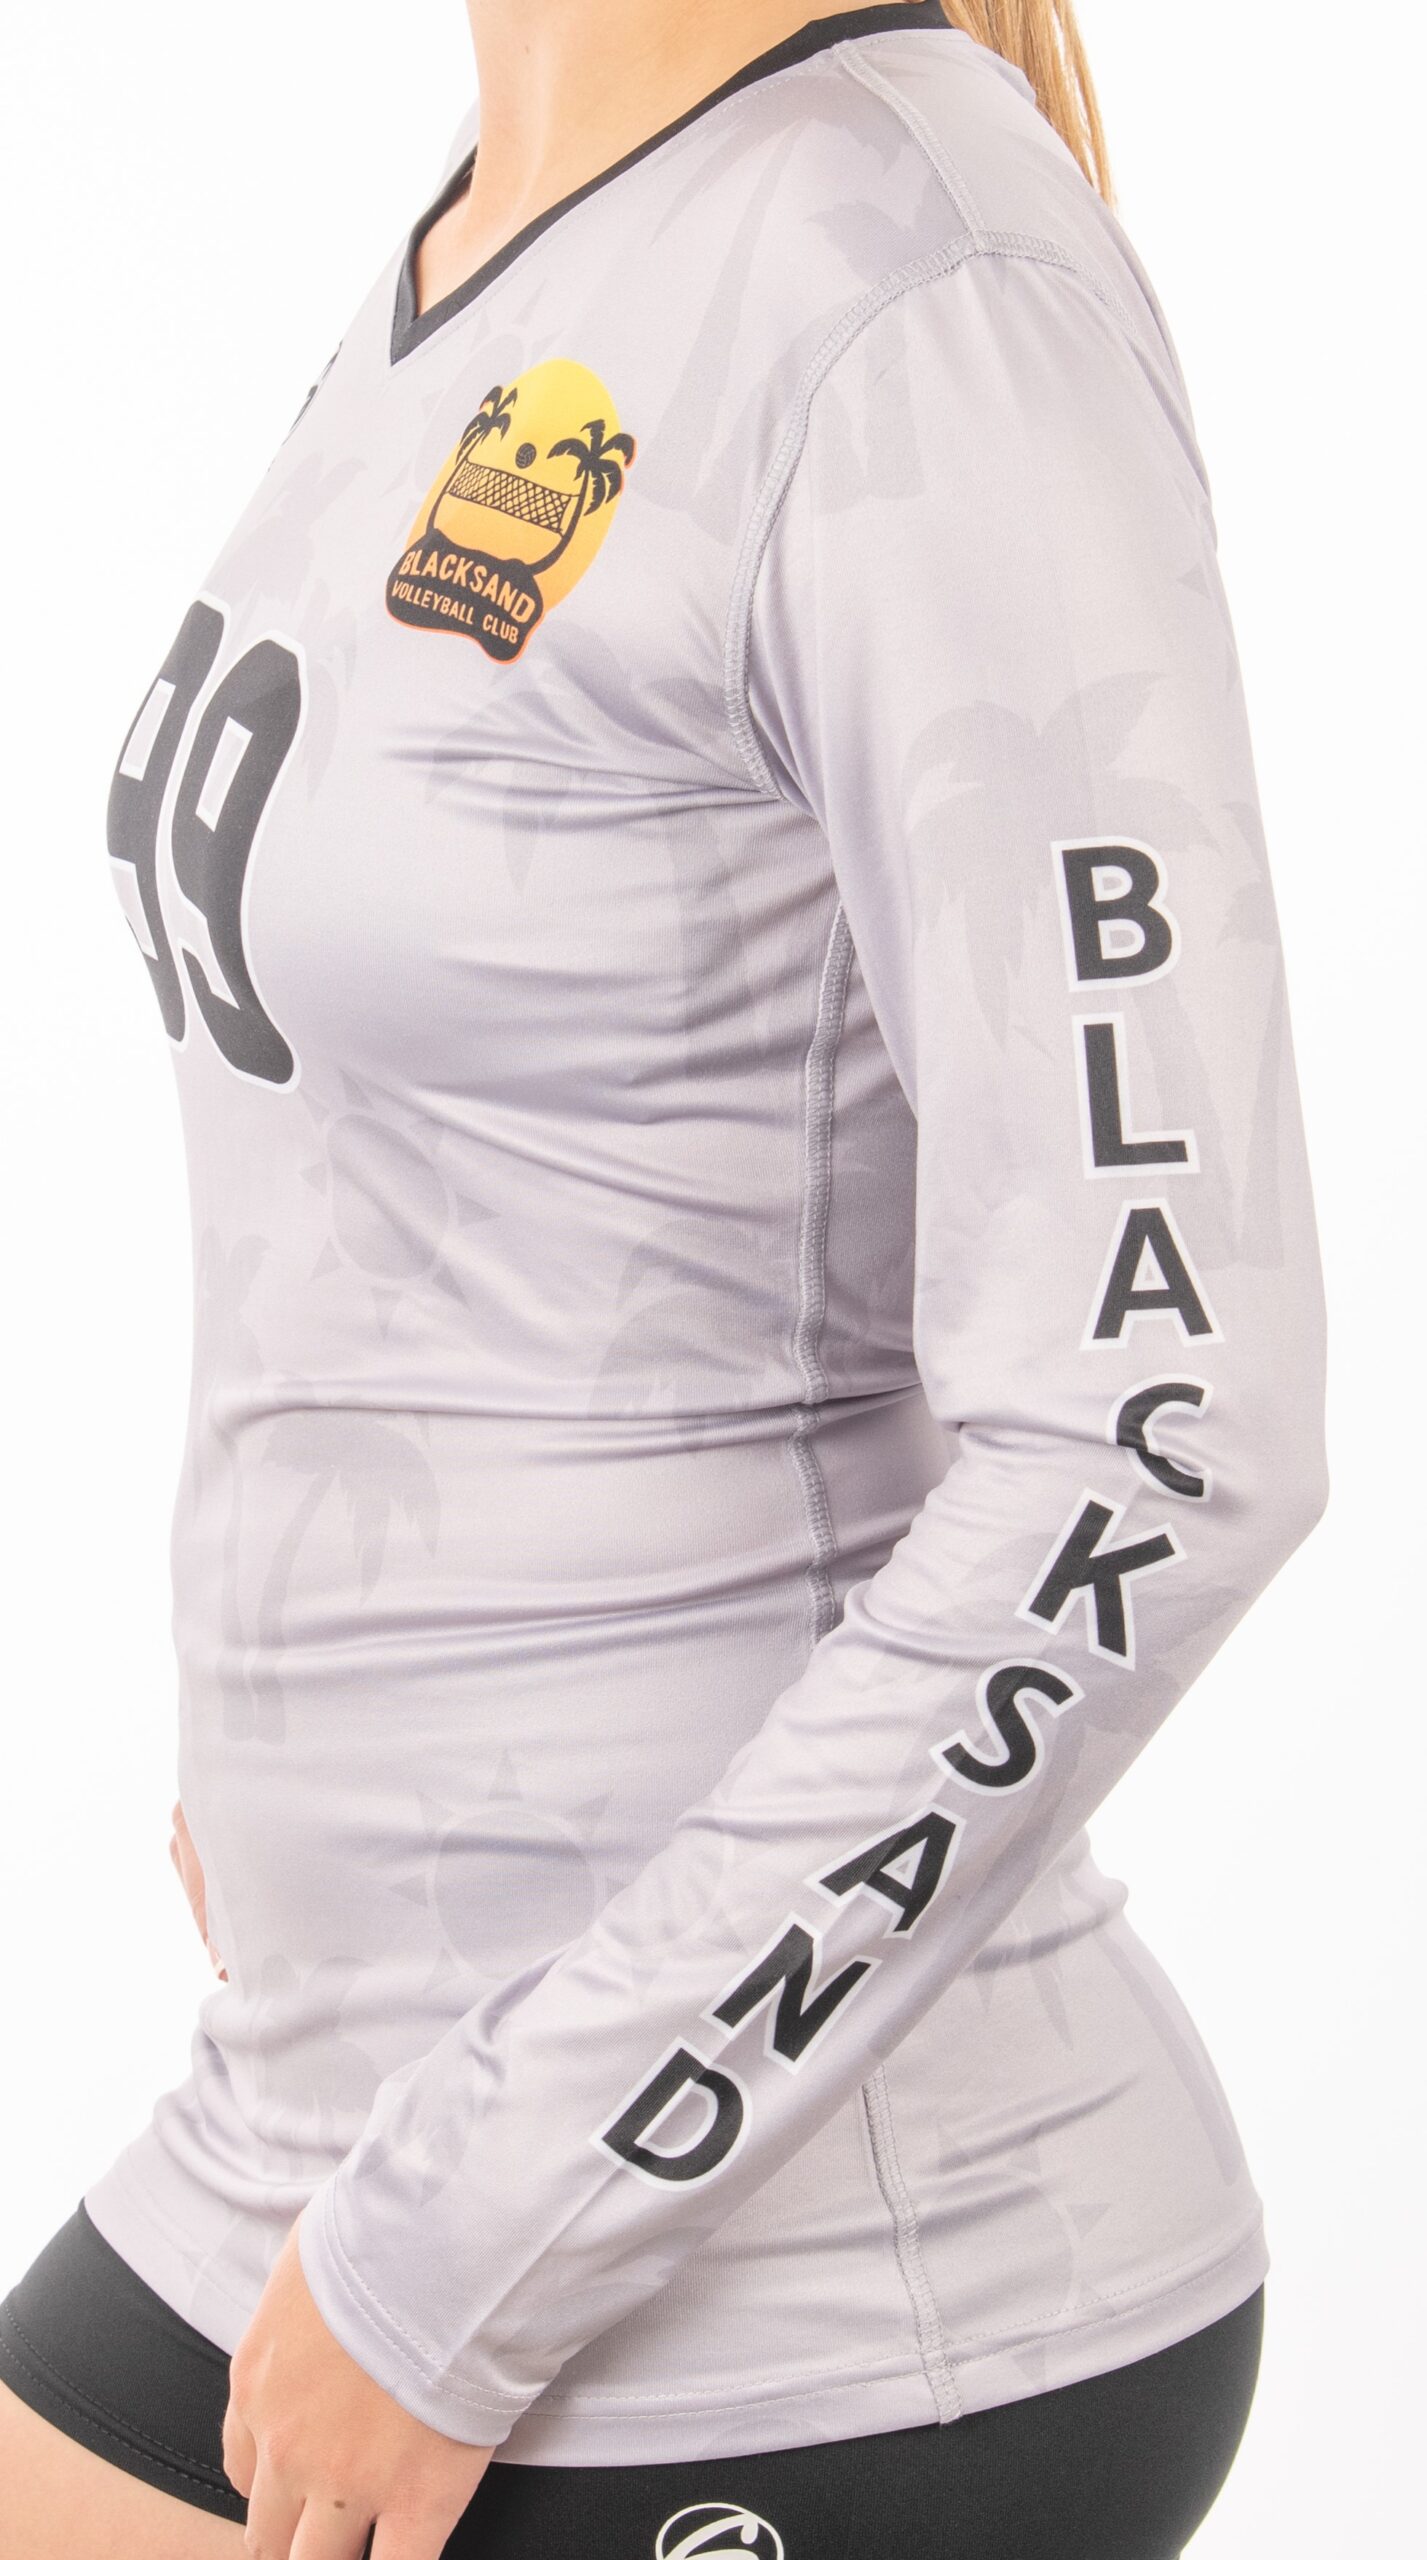 NEW~Womens ROX Volleyball Uniform Full-Zip Jacket~sz XS  Color:Hawaii and Black 